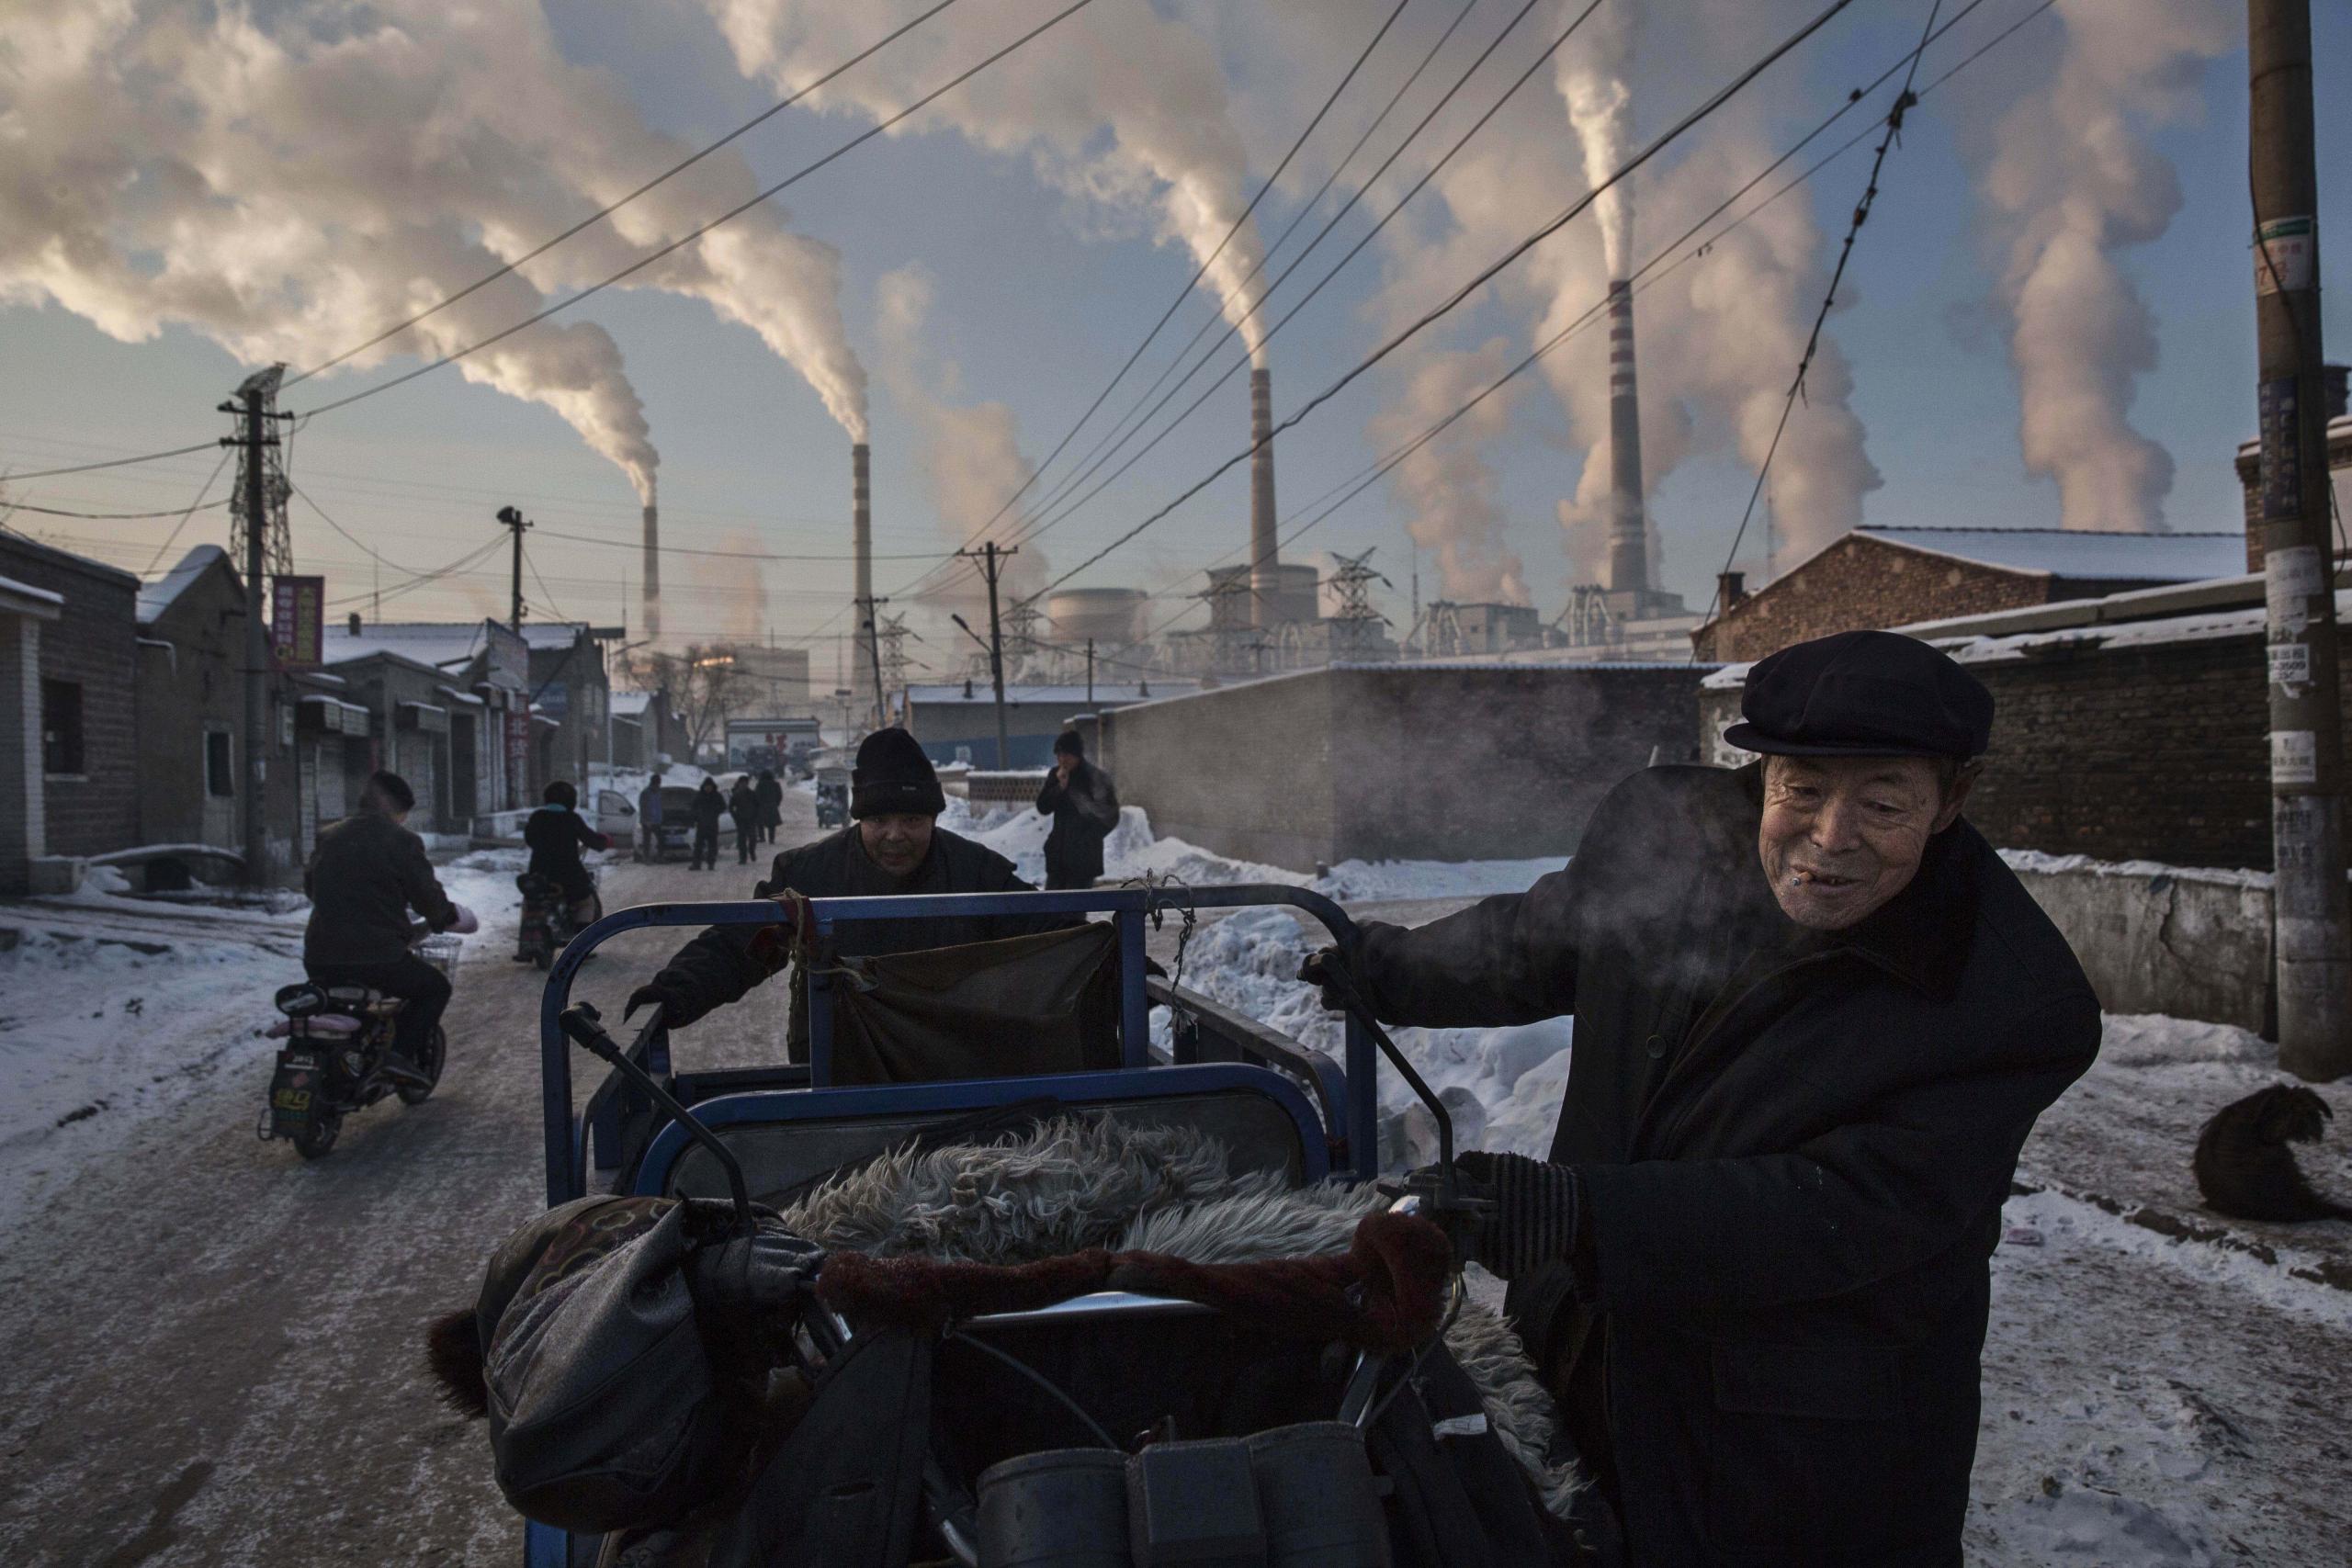 Kevin Frayer | China's Coal Addiction